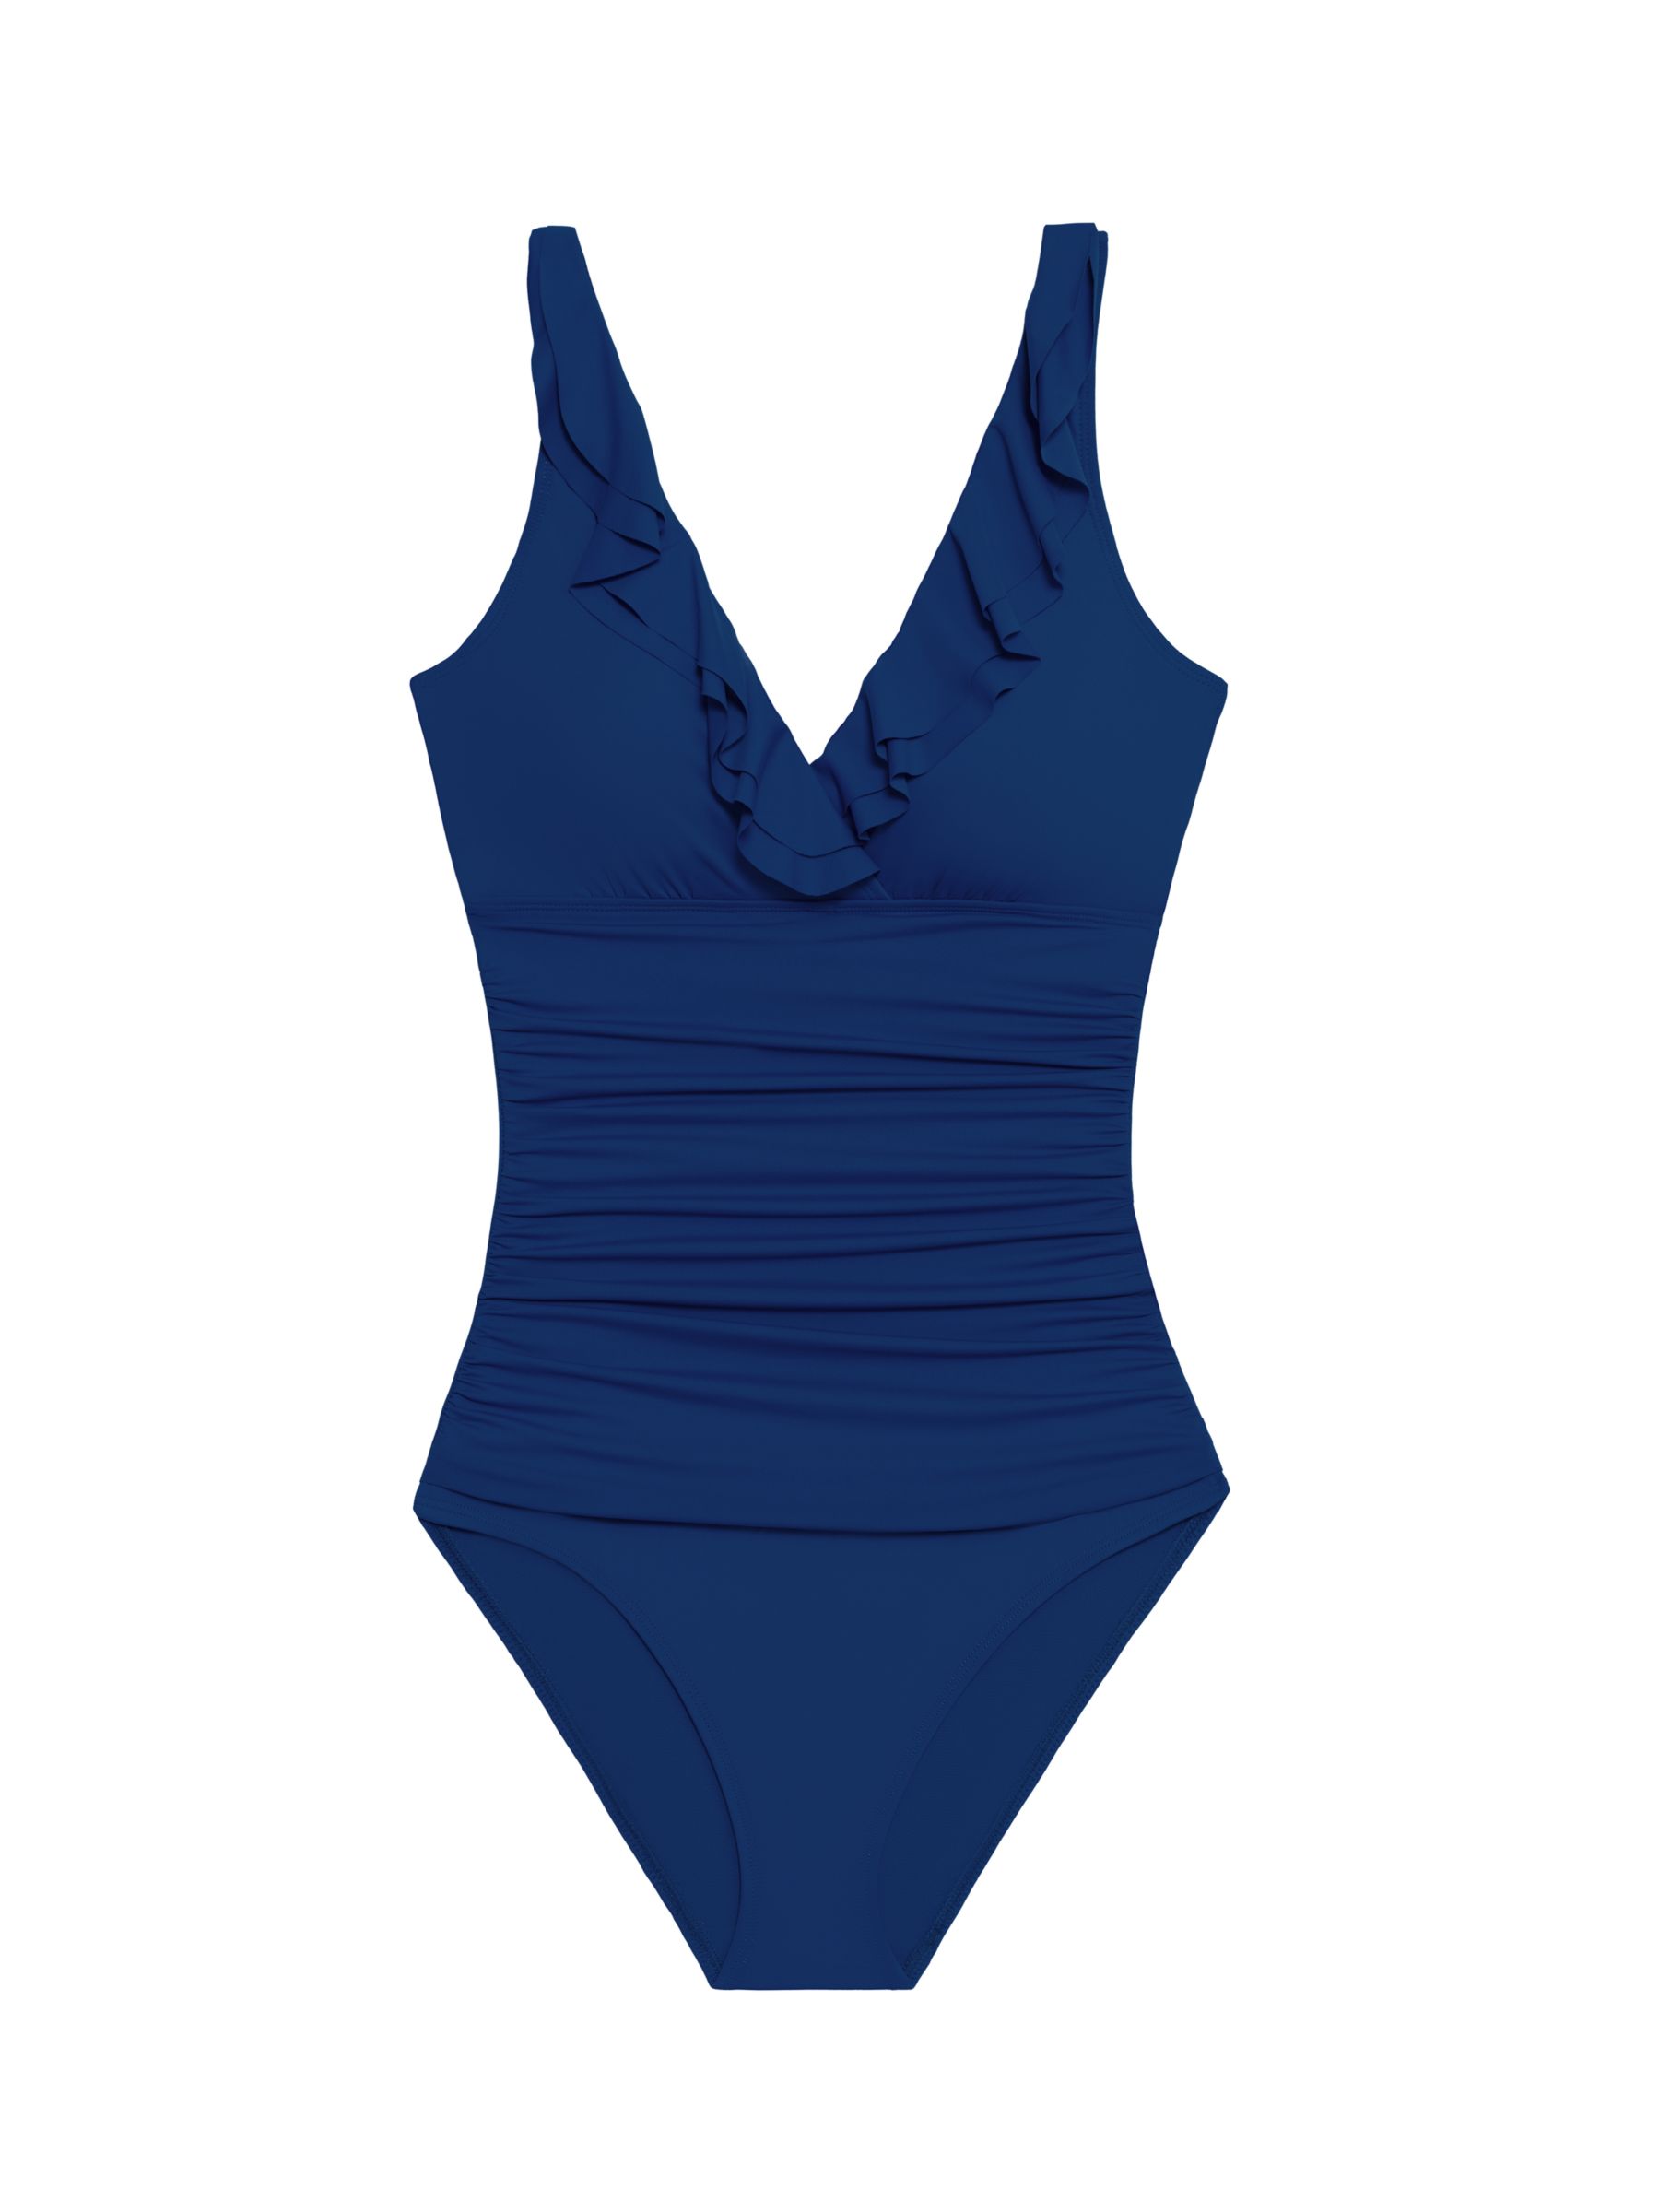 Lauren Ralph Lauren Ruffle Front Shaping Swimsuit, Sapphire, 8